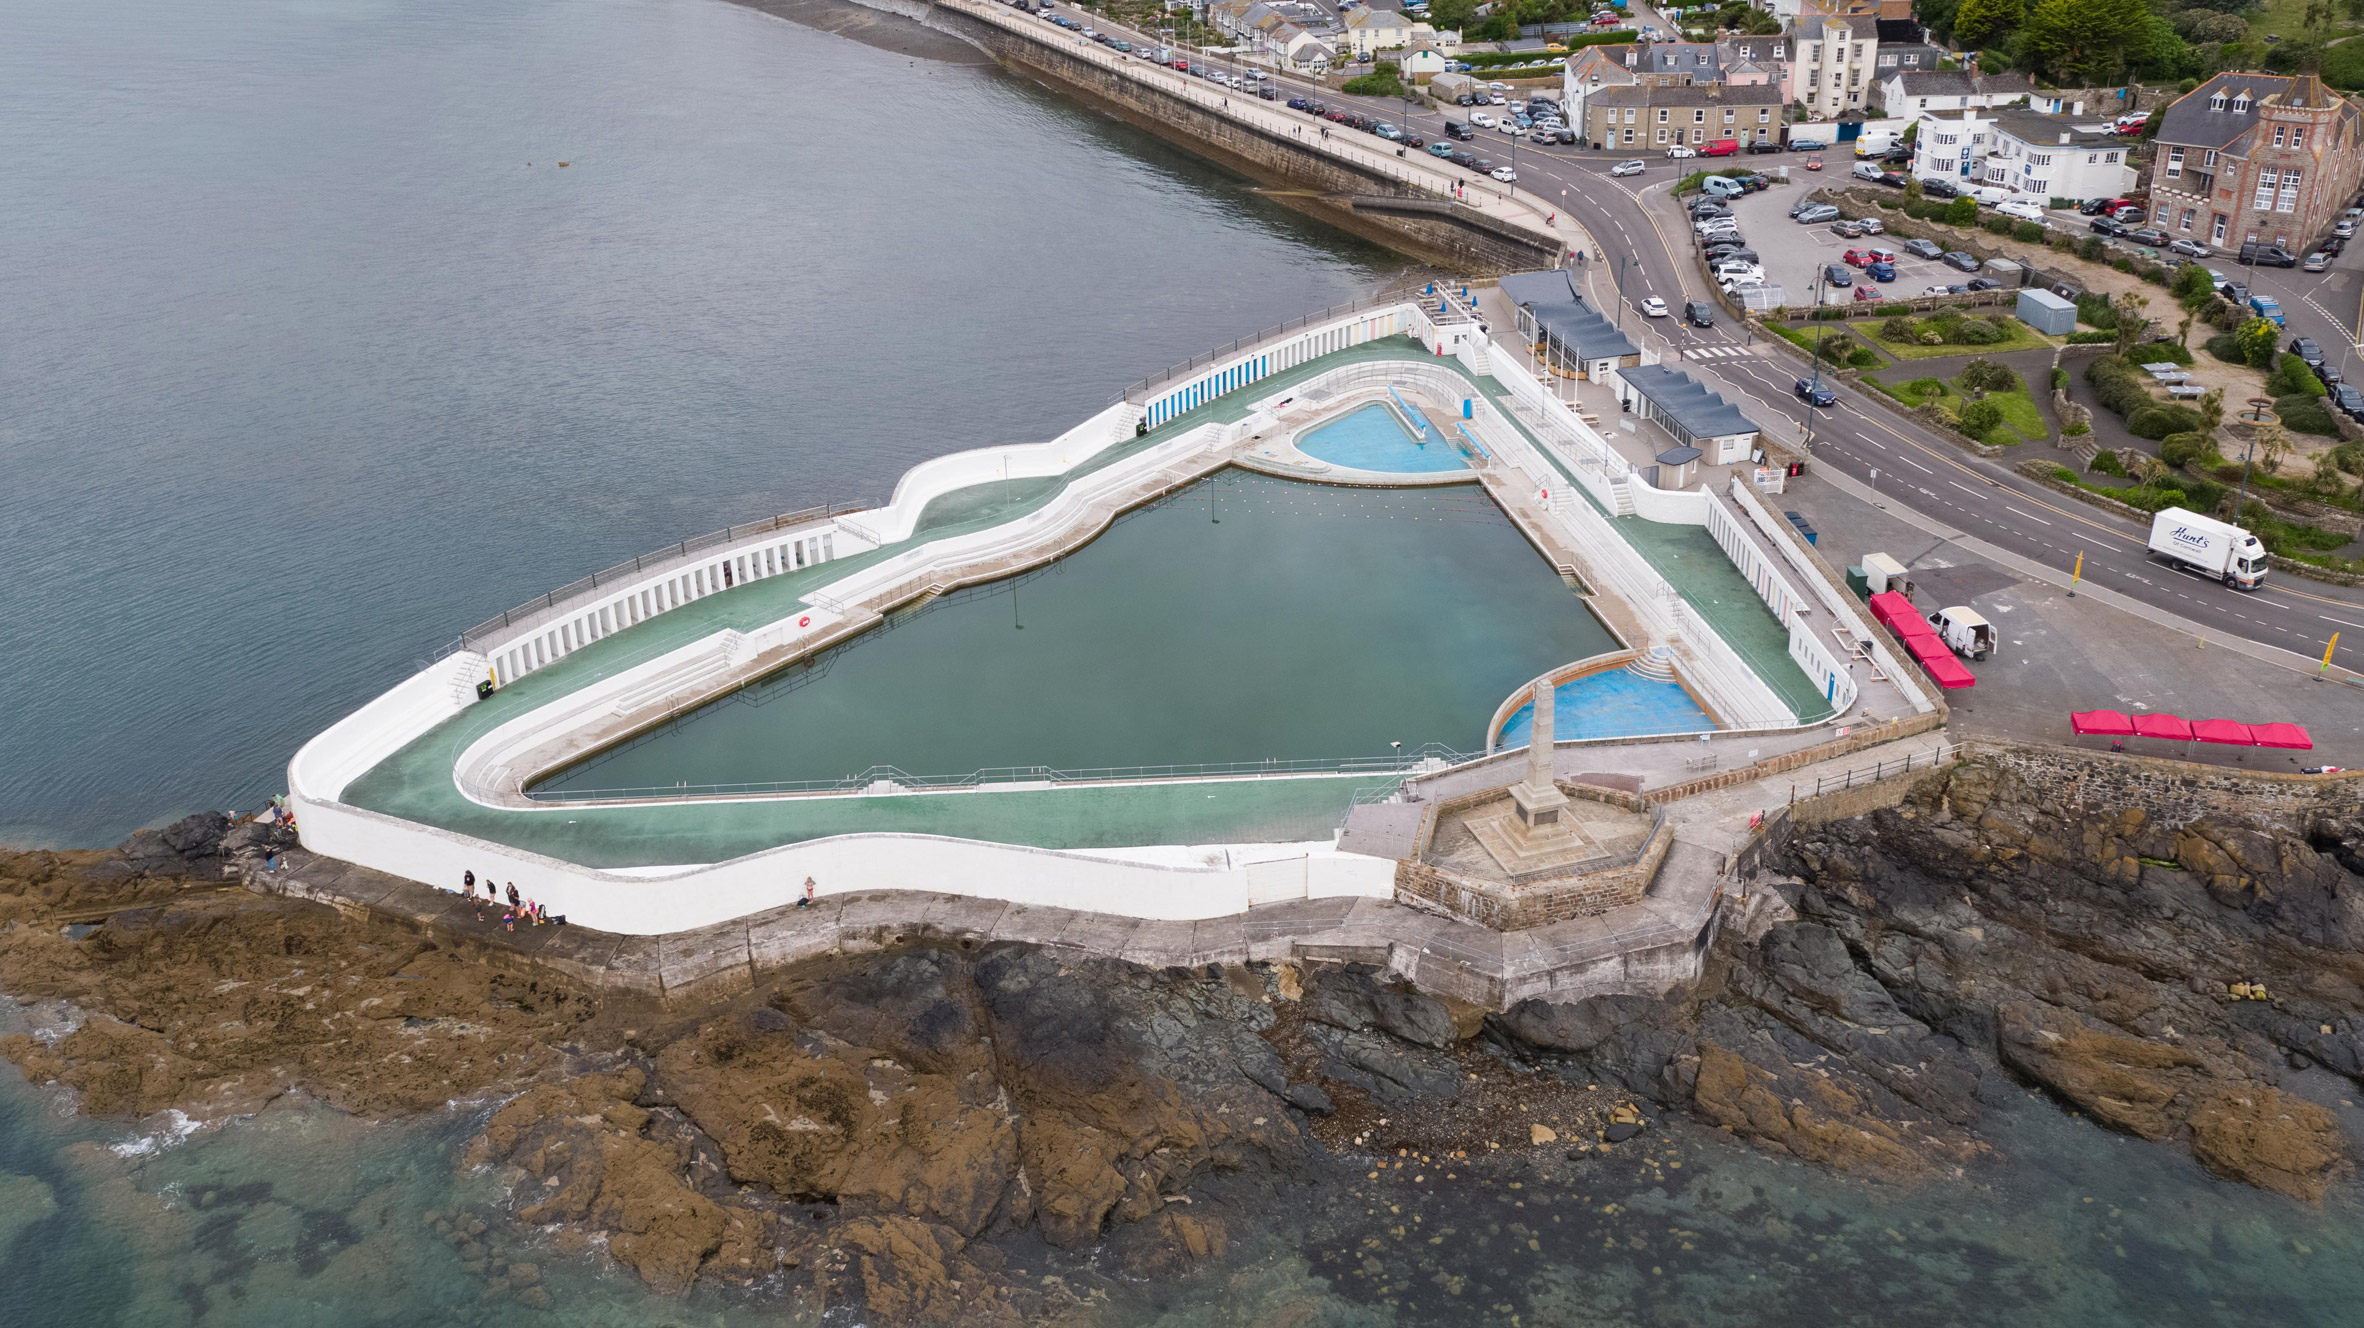 Olympic-size swimming pool - Wikipedia